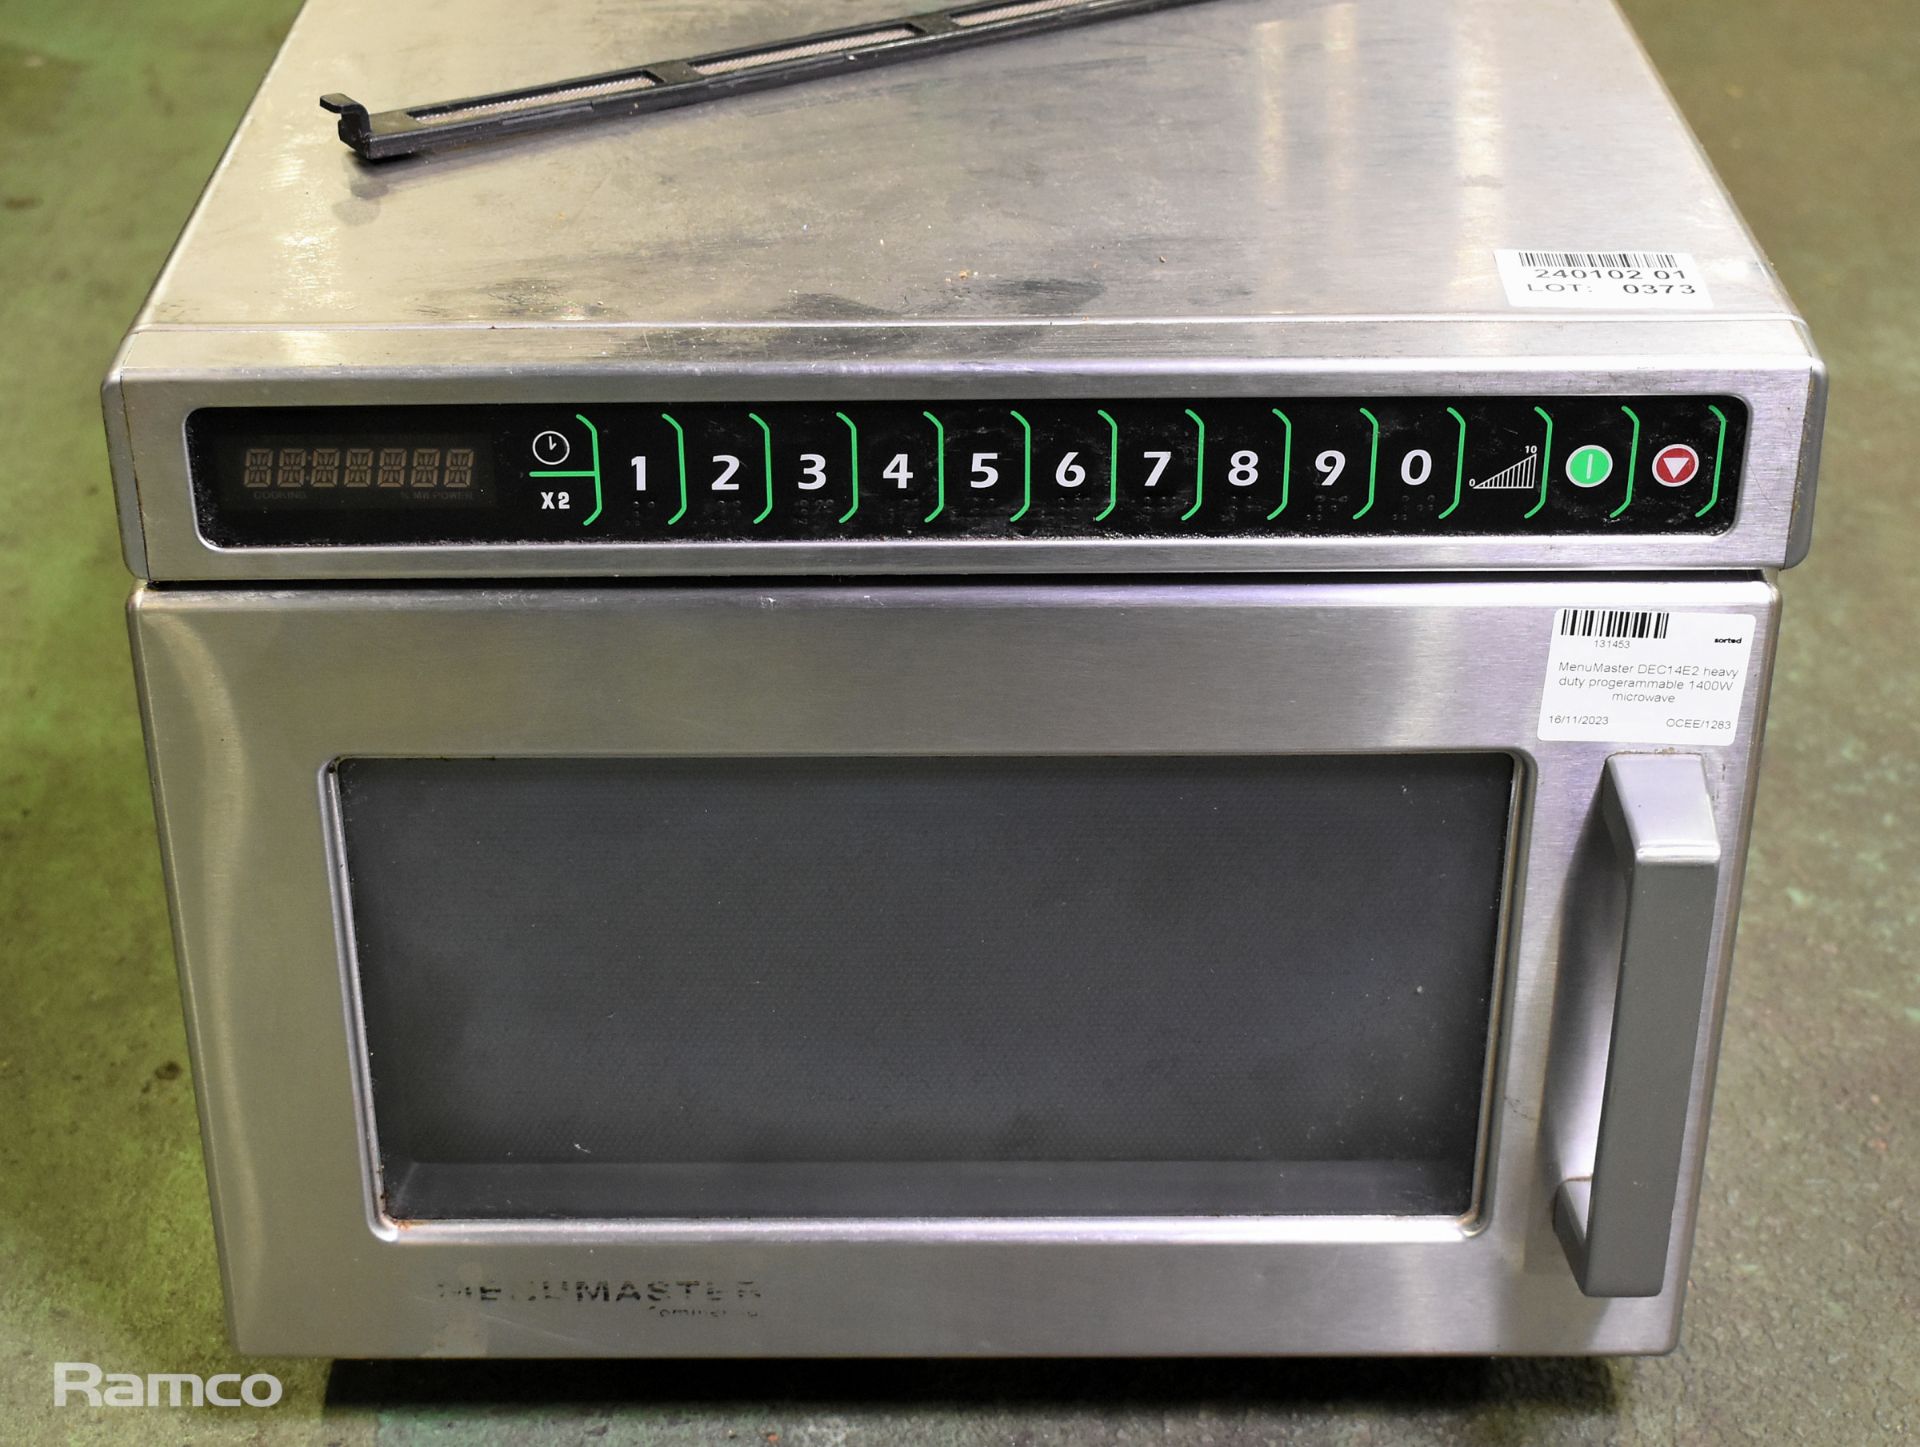 MenuMaster DEC14E2 heavy duty programmable 1400W microwave - Image 2 of 6